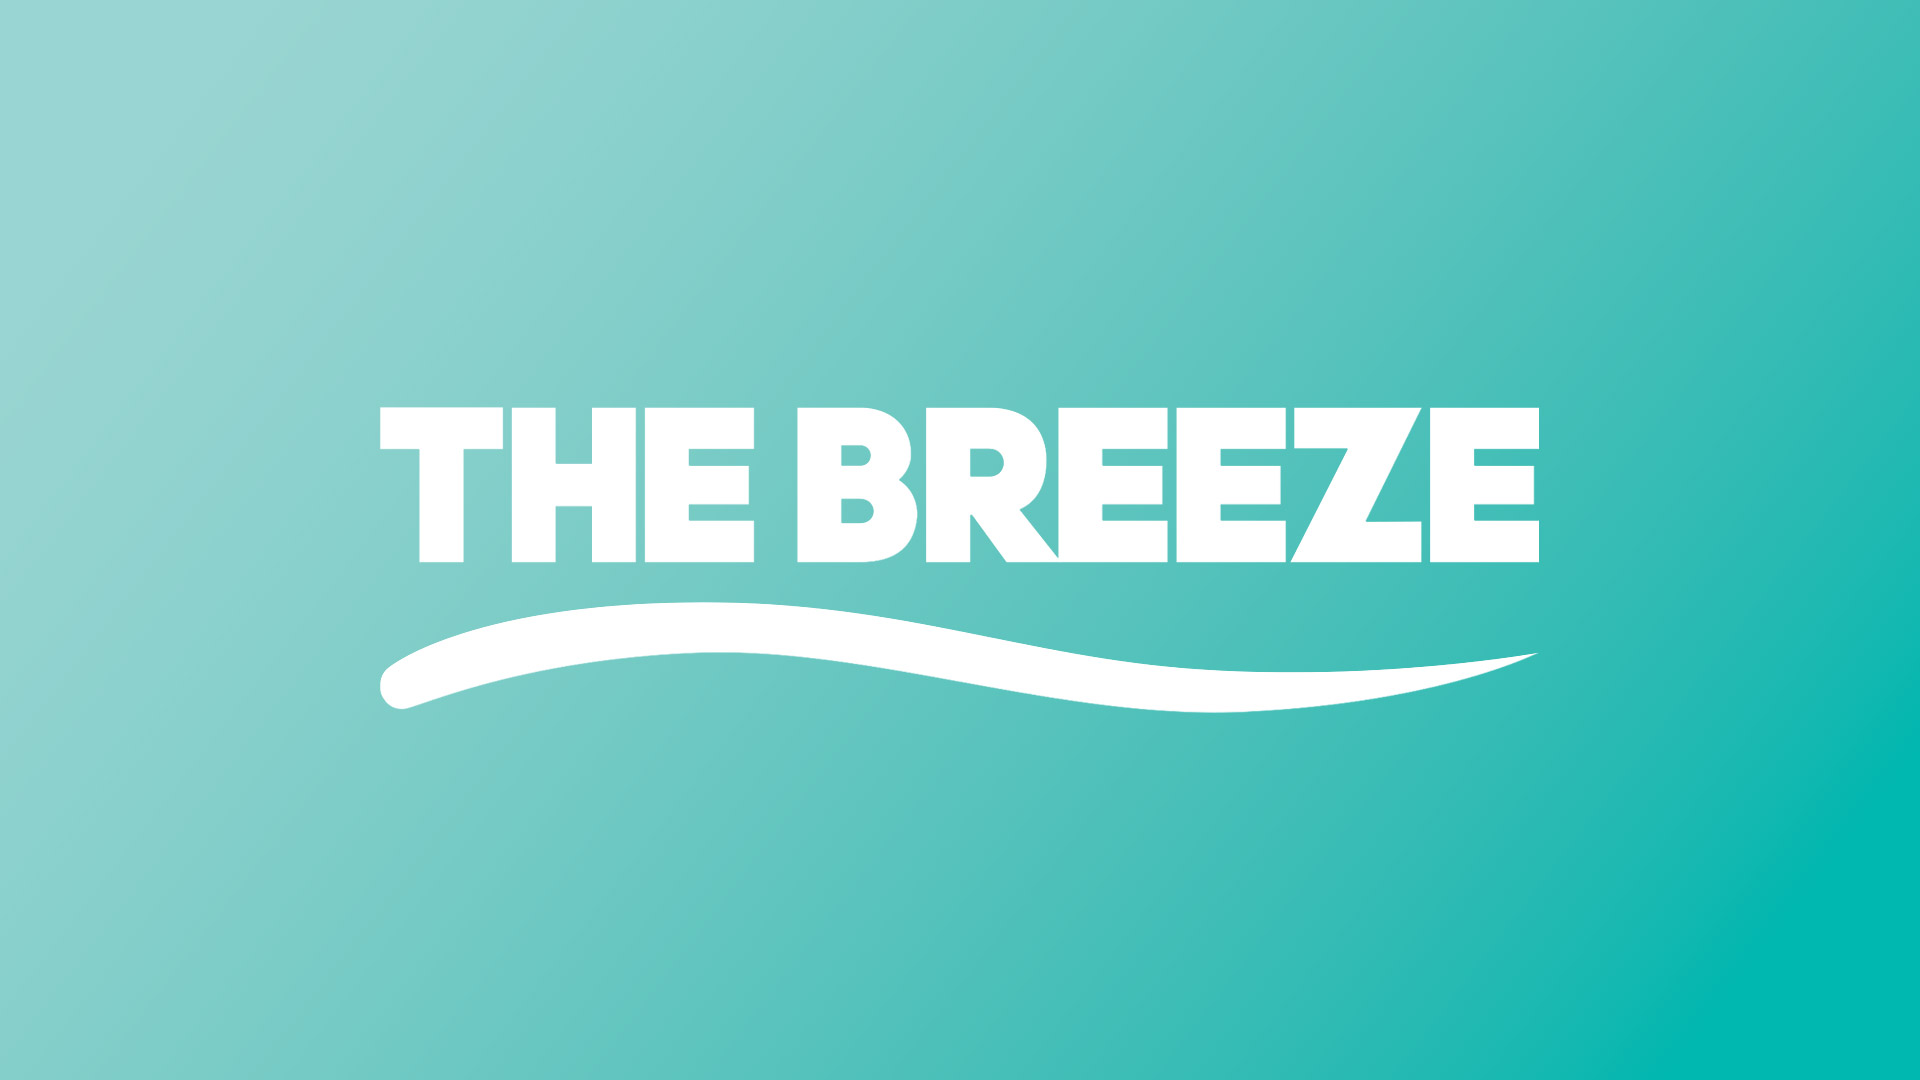 The Breeze logo